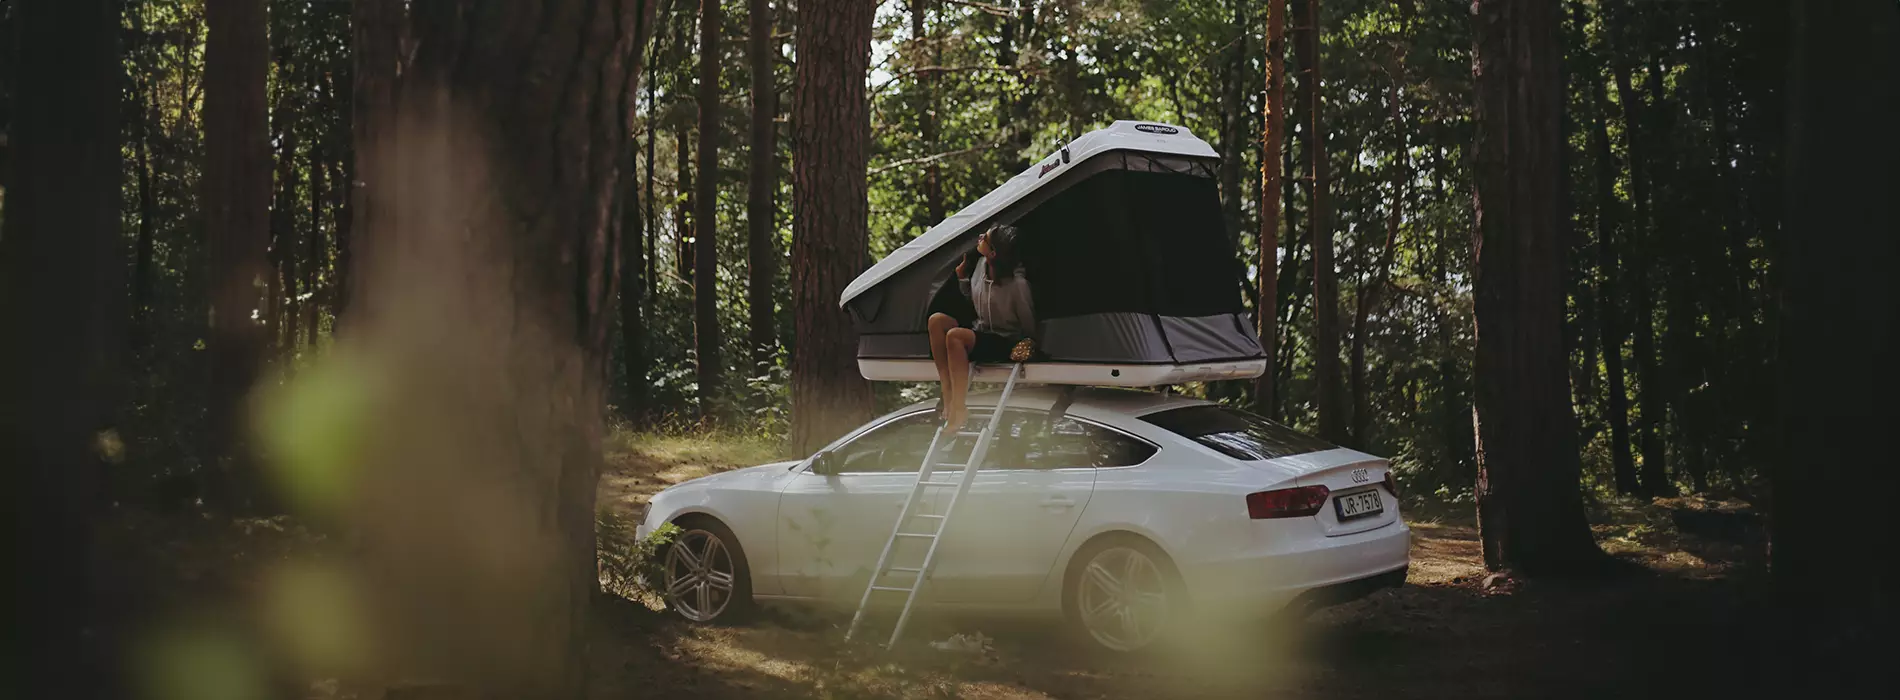 Elvijs Viļevičs @aparaats James Baroud Space on top of his Audi for family camping